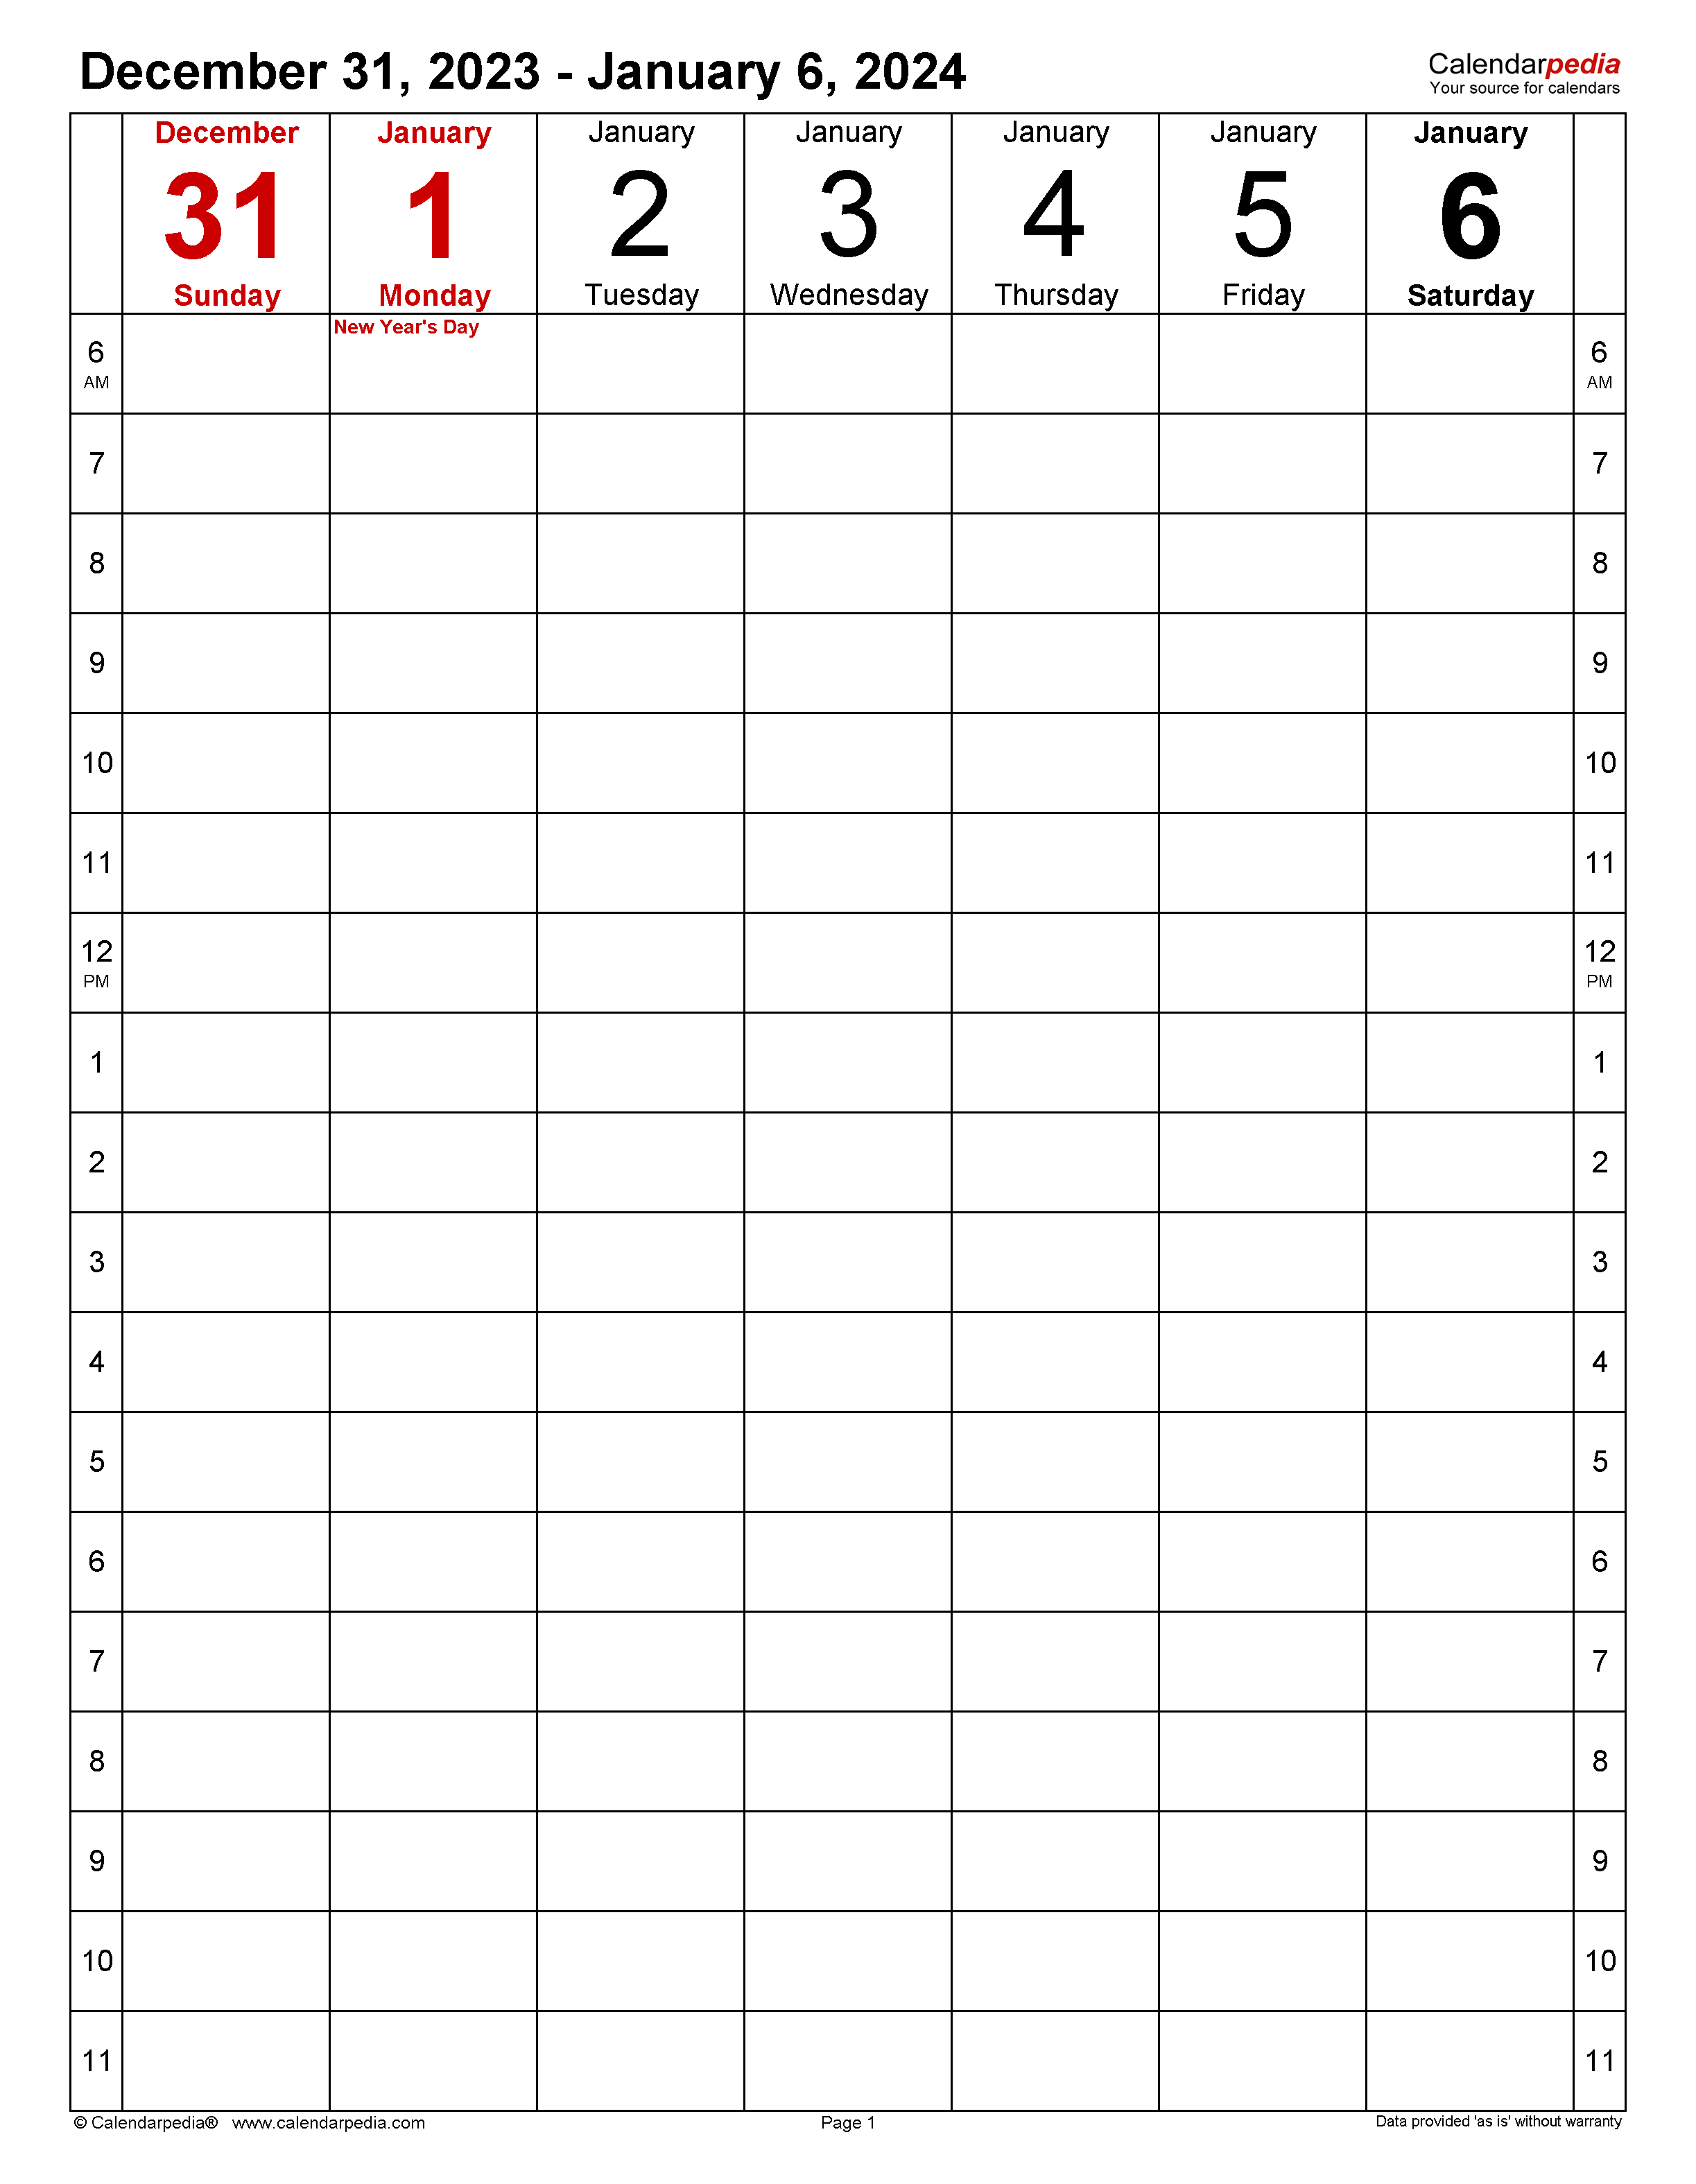 Weekly Calendars 2024 For Pdf - 12 Free Printable Templates for Printable Calendar 2024 Weekly